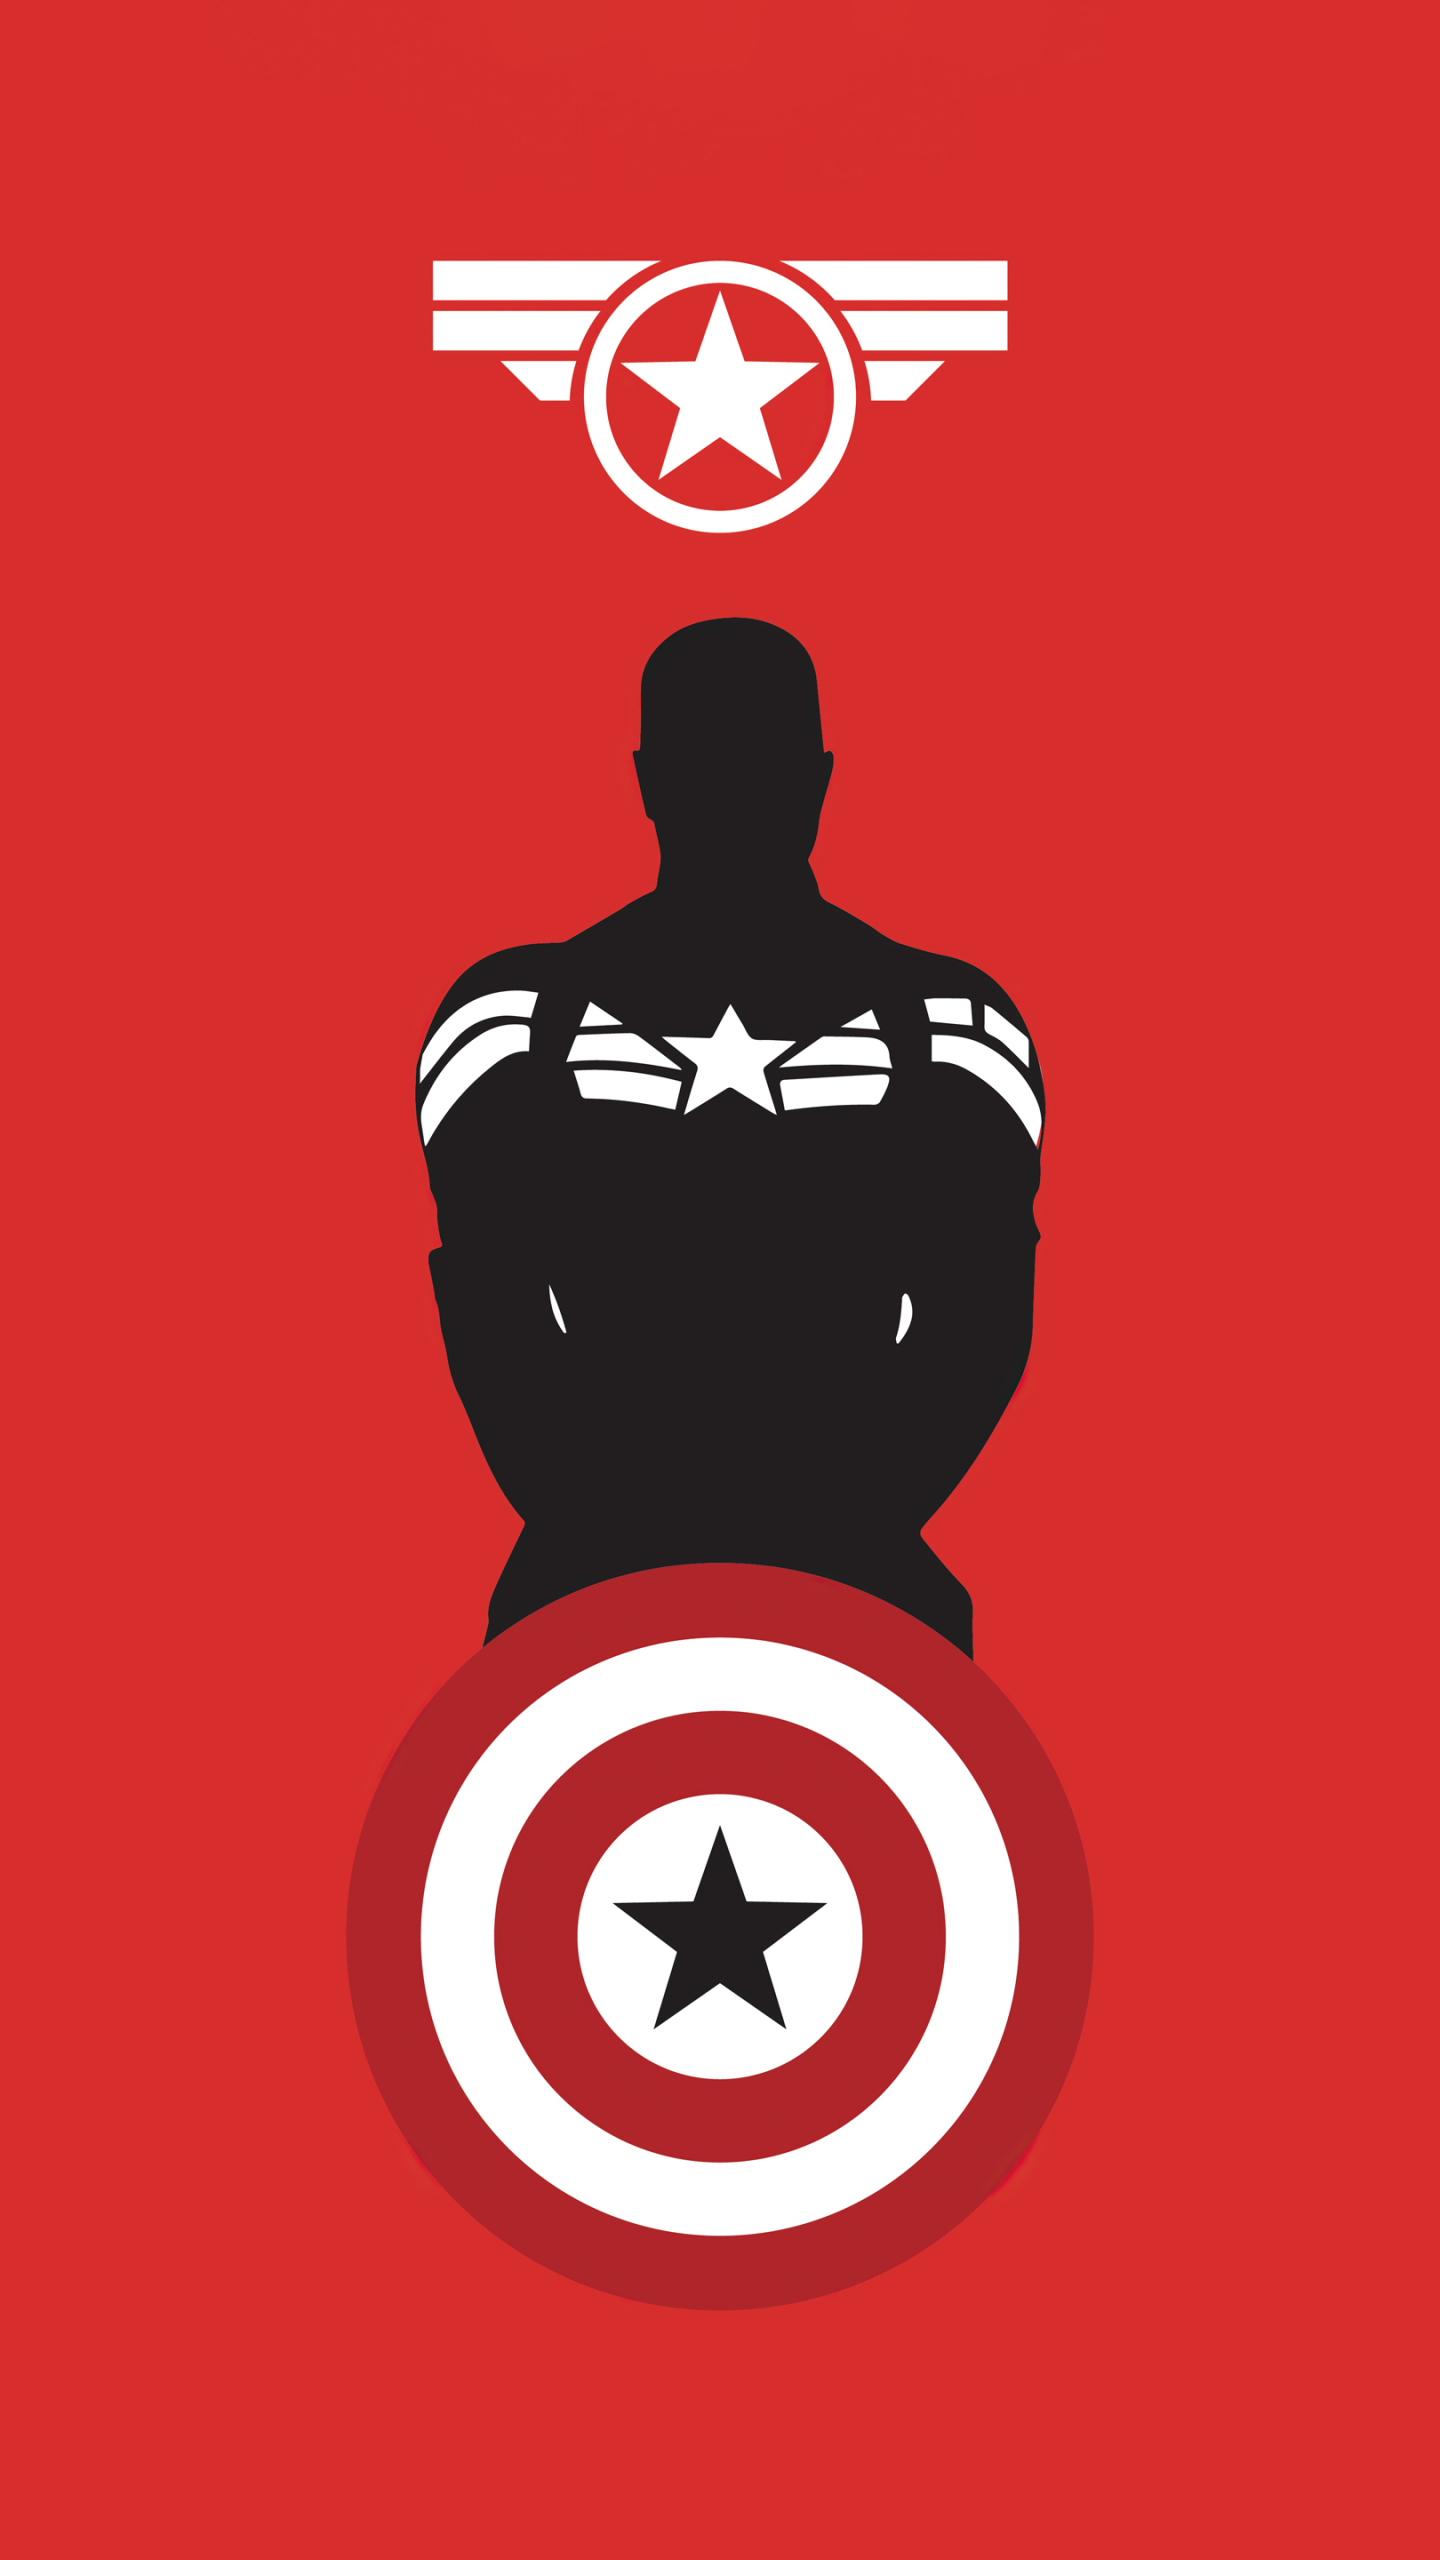 Wallpaper punisher, superhero's logo, minimal, dark desktop